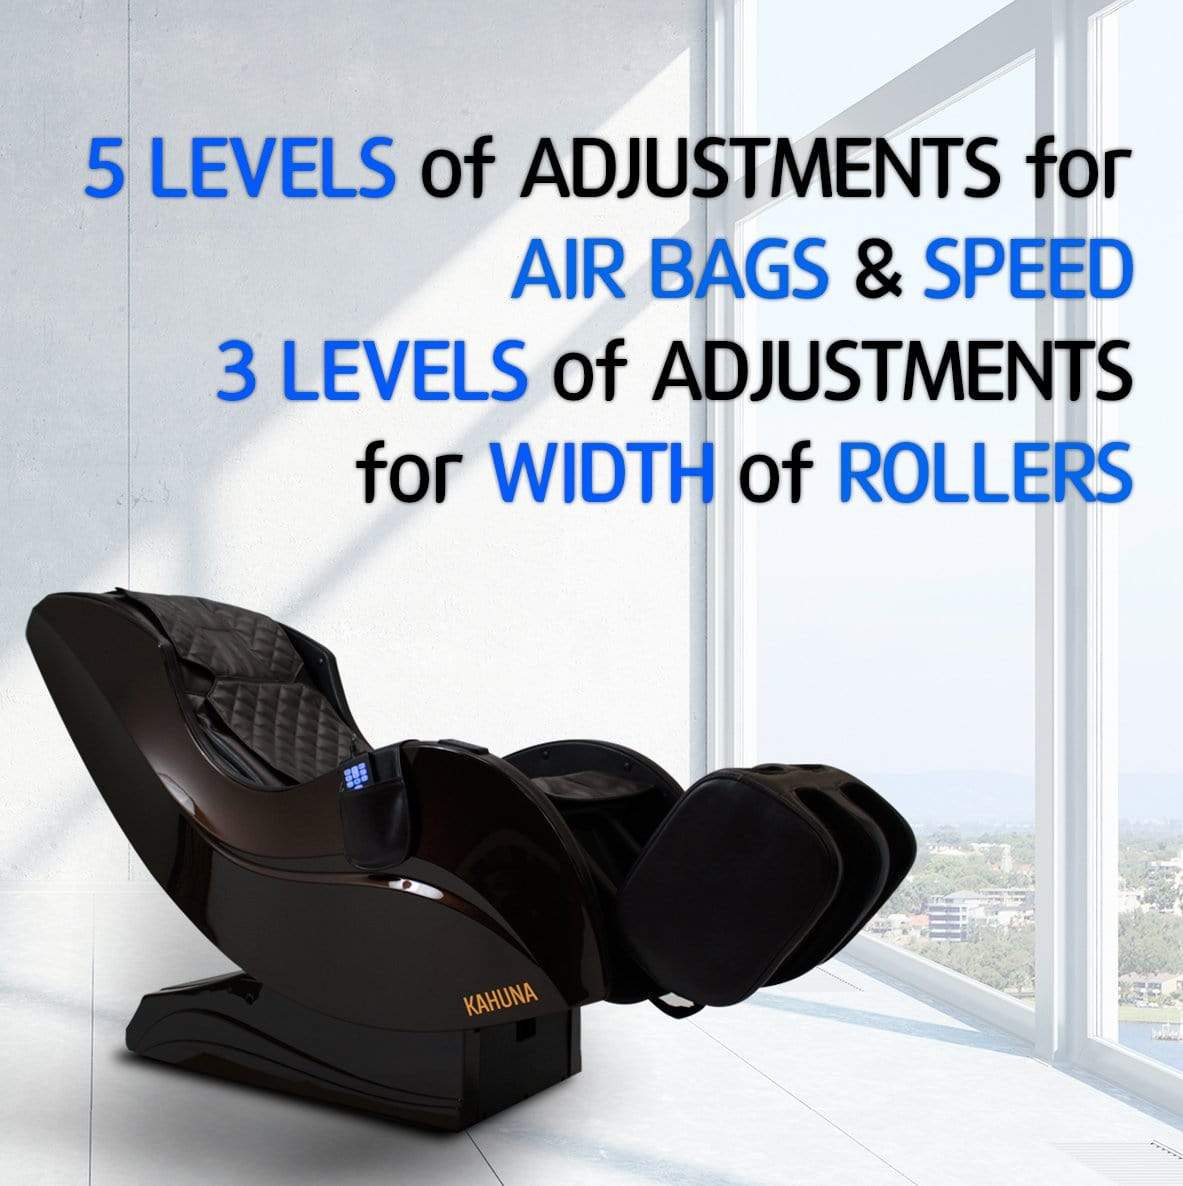 Ace Massage Chairs Slender Style SL-Track Kahuna Massage Chair HM-5000